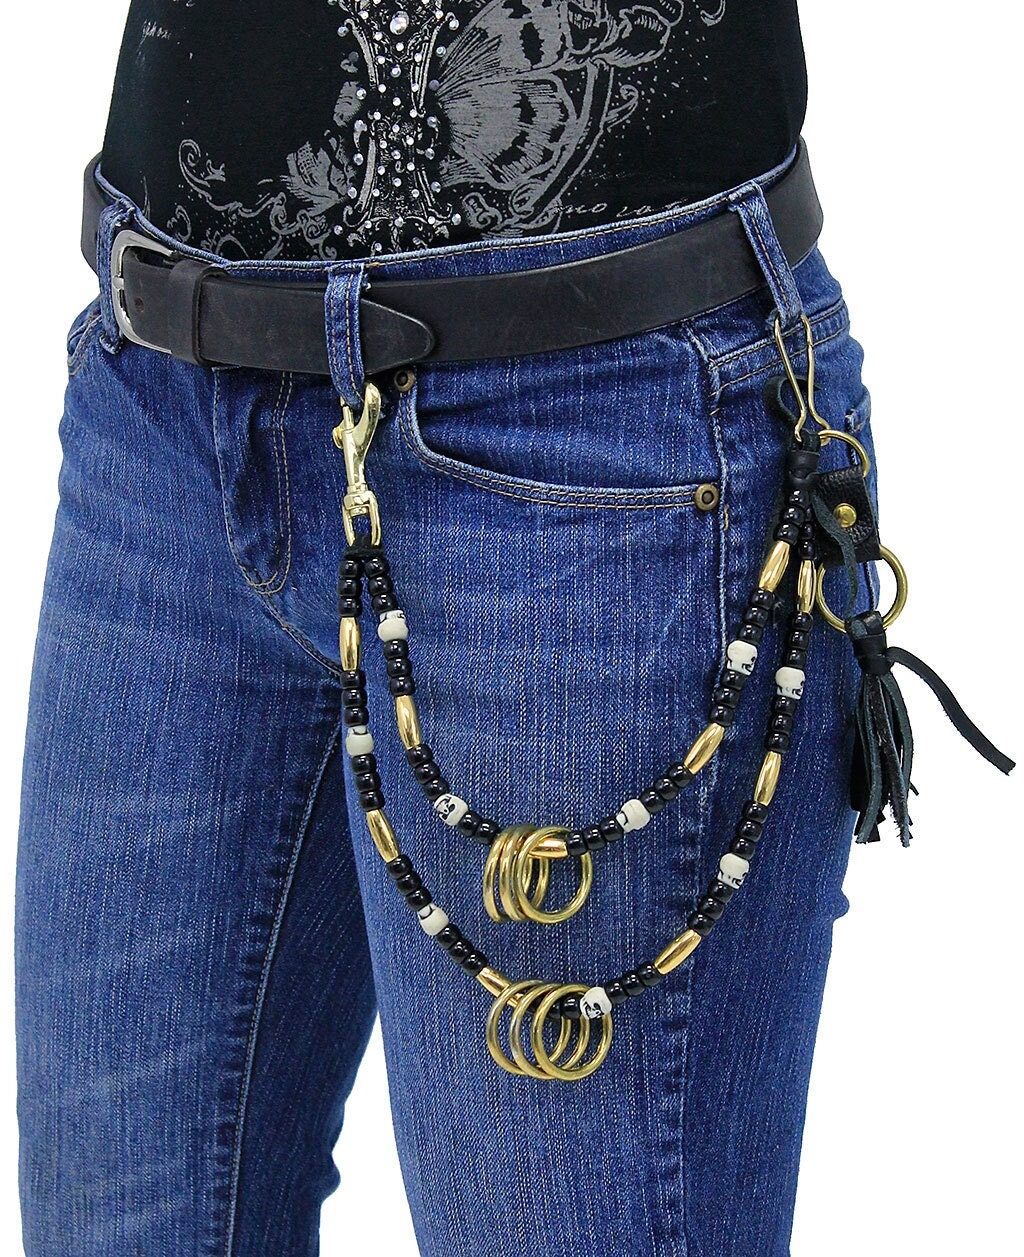 5-Strand Metal Chain Reaction Belt Loop Pants Chain